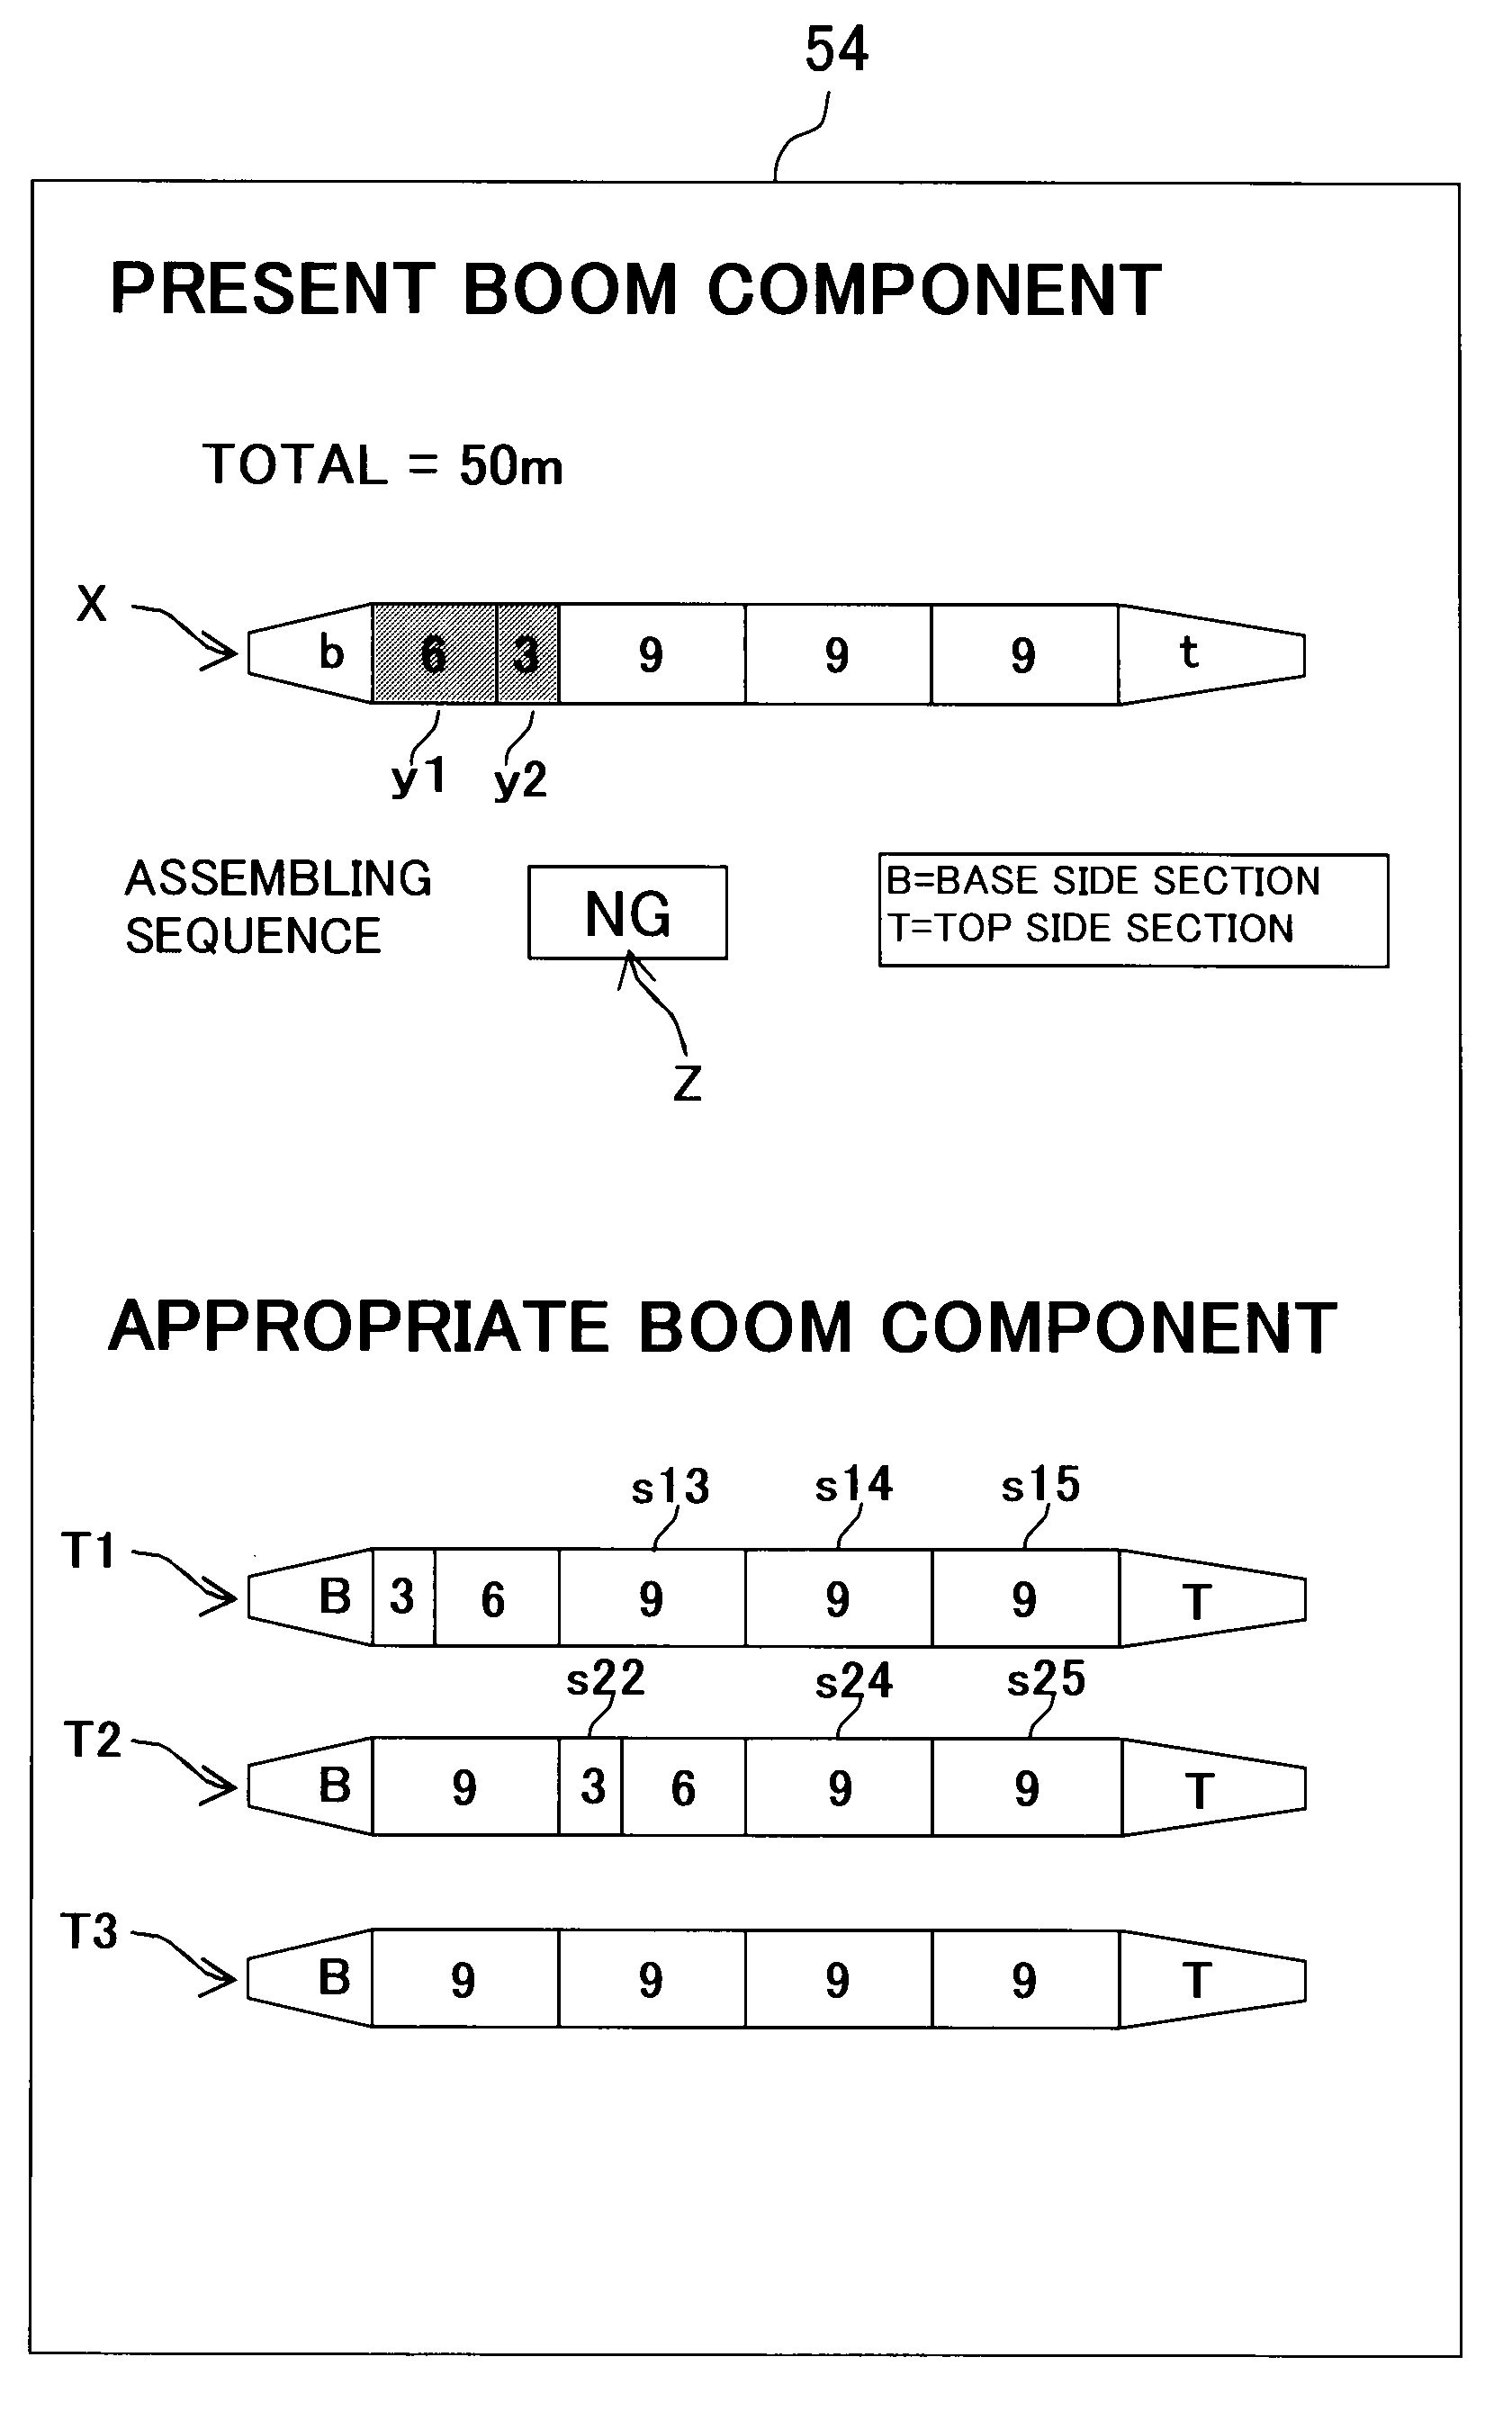 Boom component display apparatus